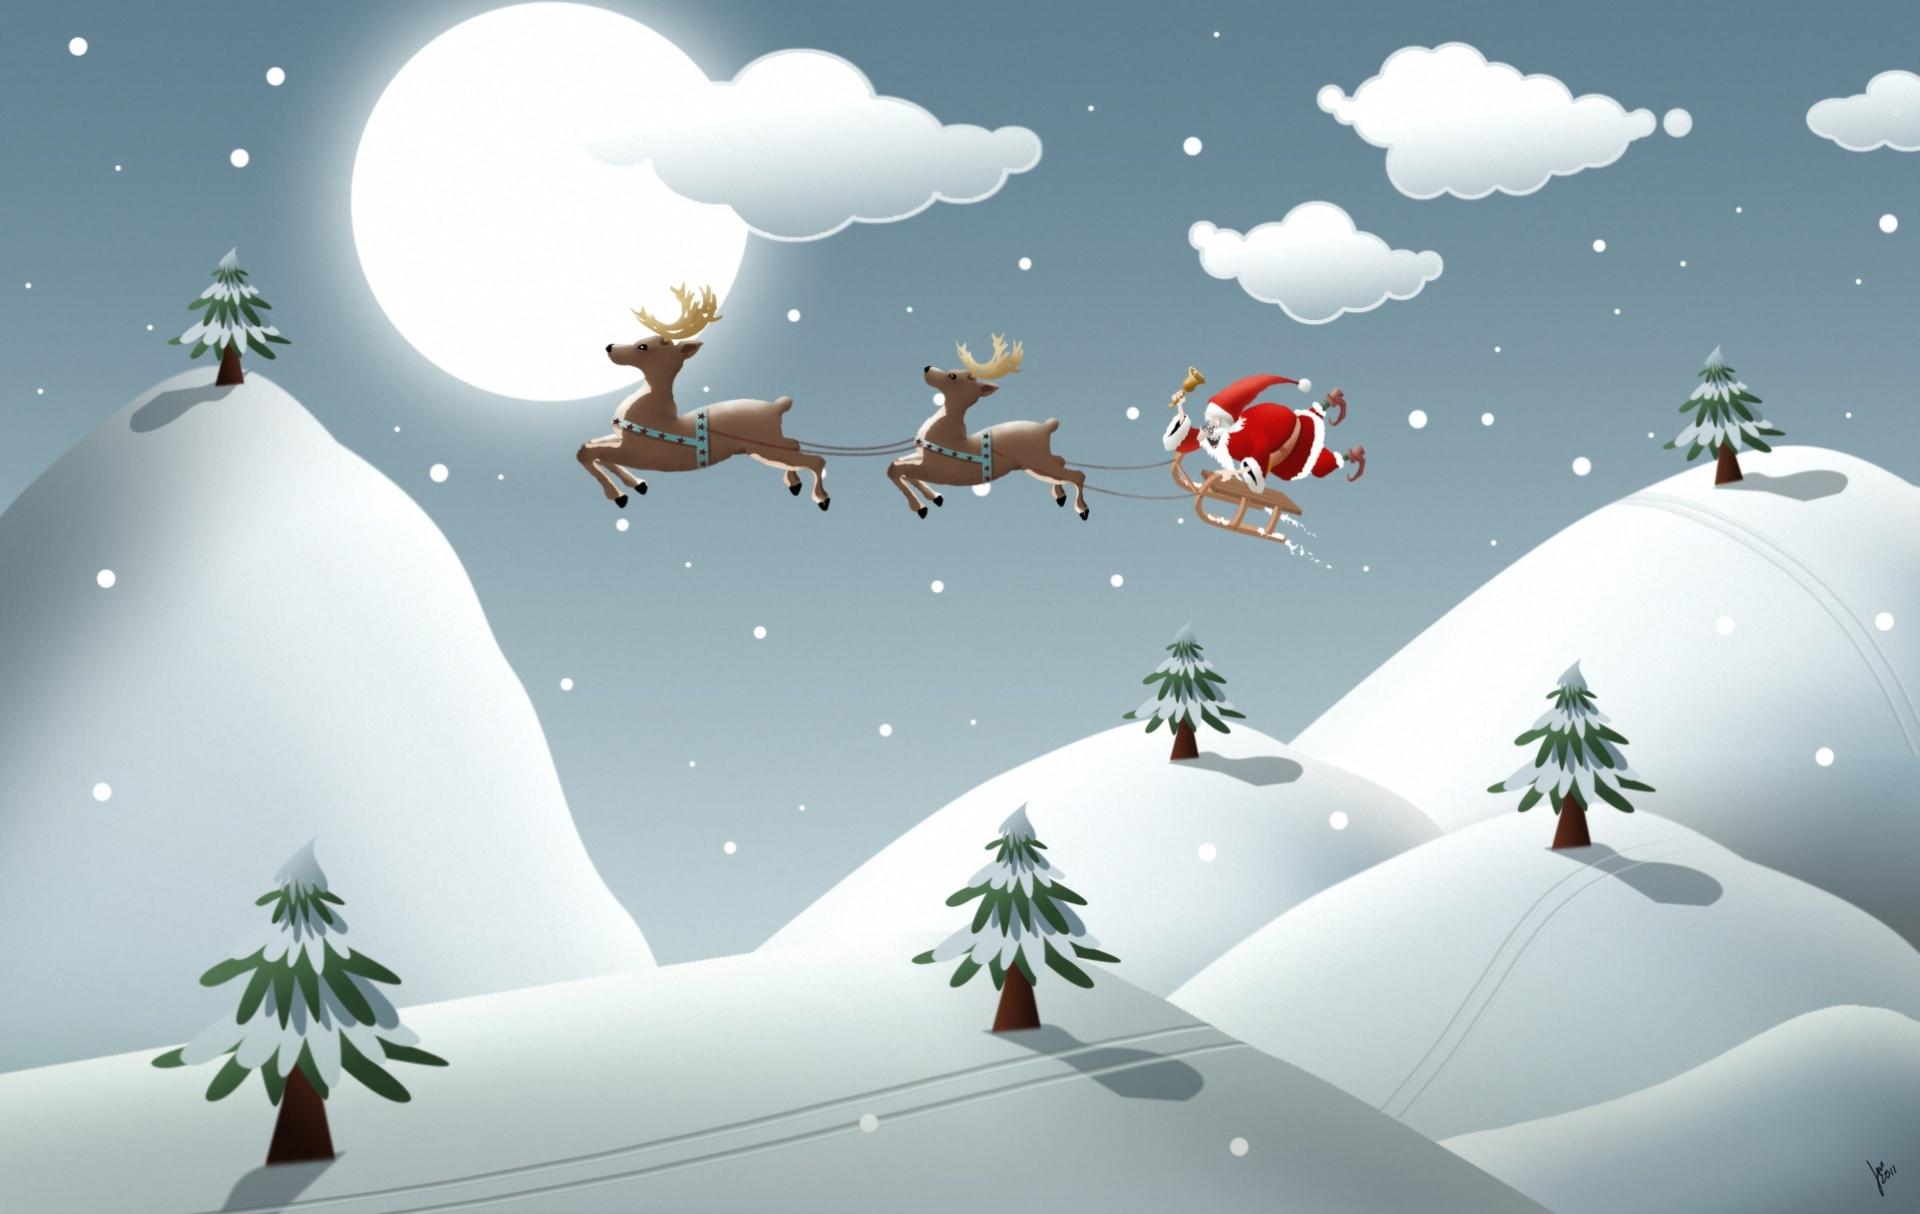 M M Christmas Cartoon Wallpaper. Cartoon Wallpaper, Cartoon Christmas Wallpaper and Disney Cartoon Wallpaper